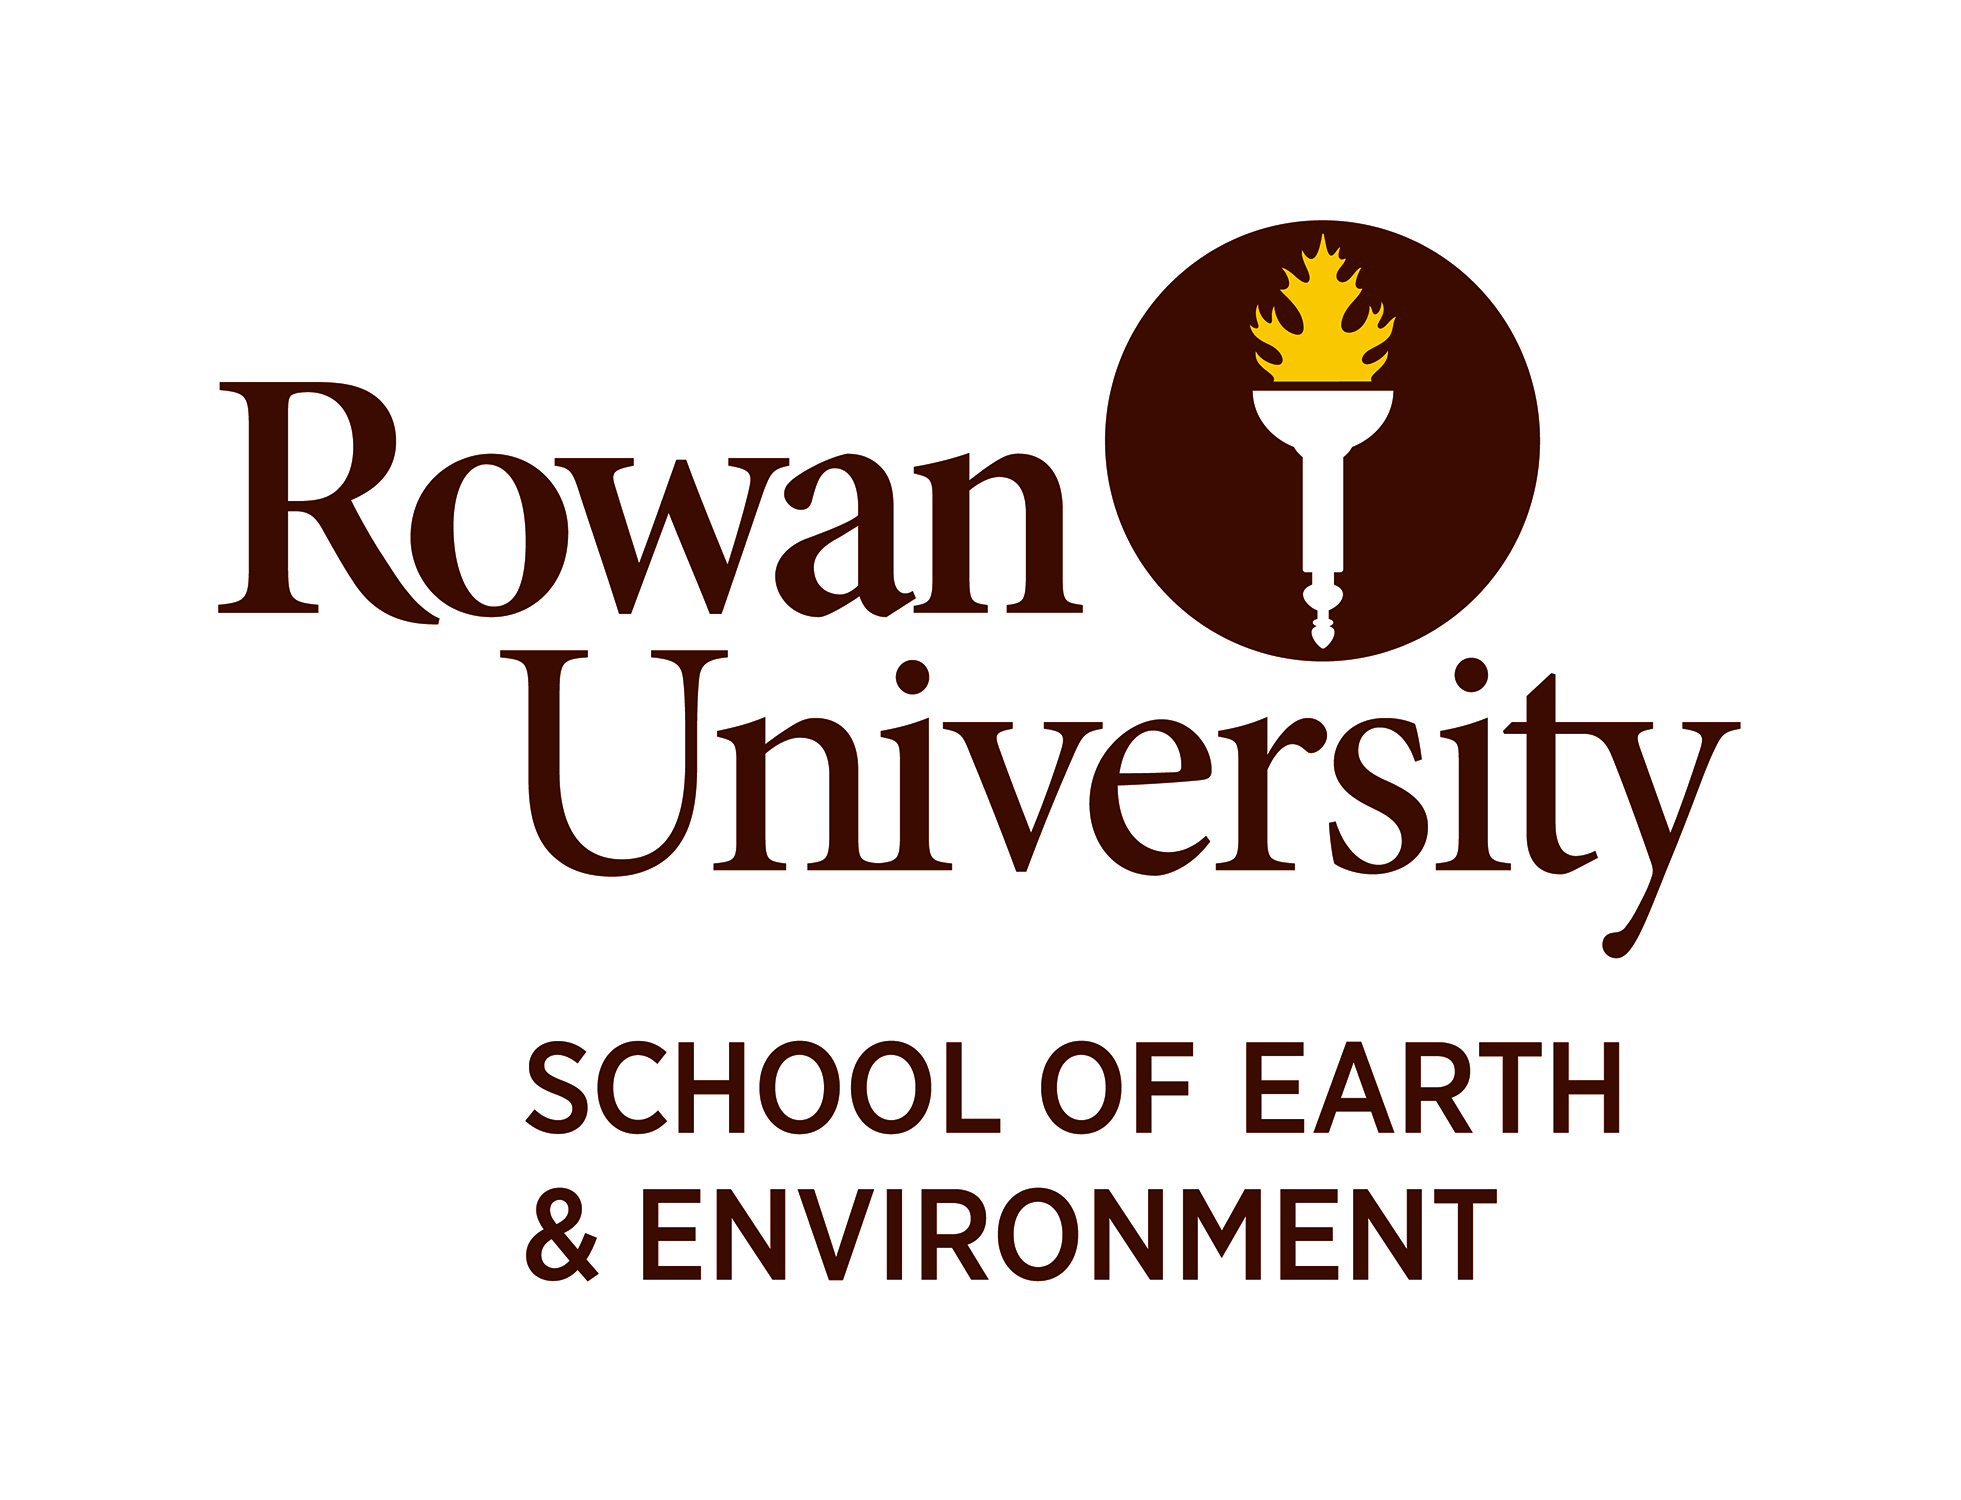 School of Earth & Environment, Rowan University